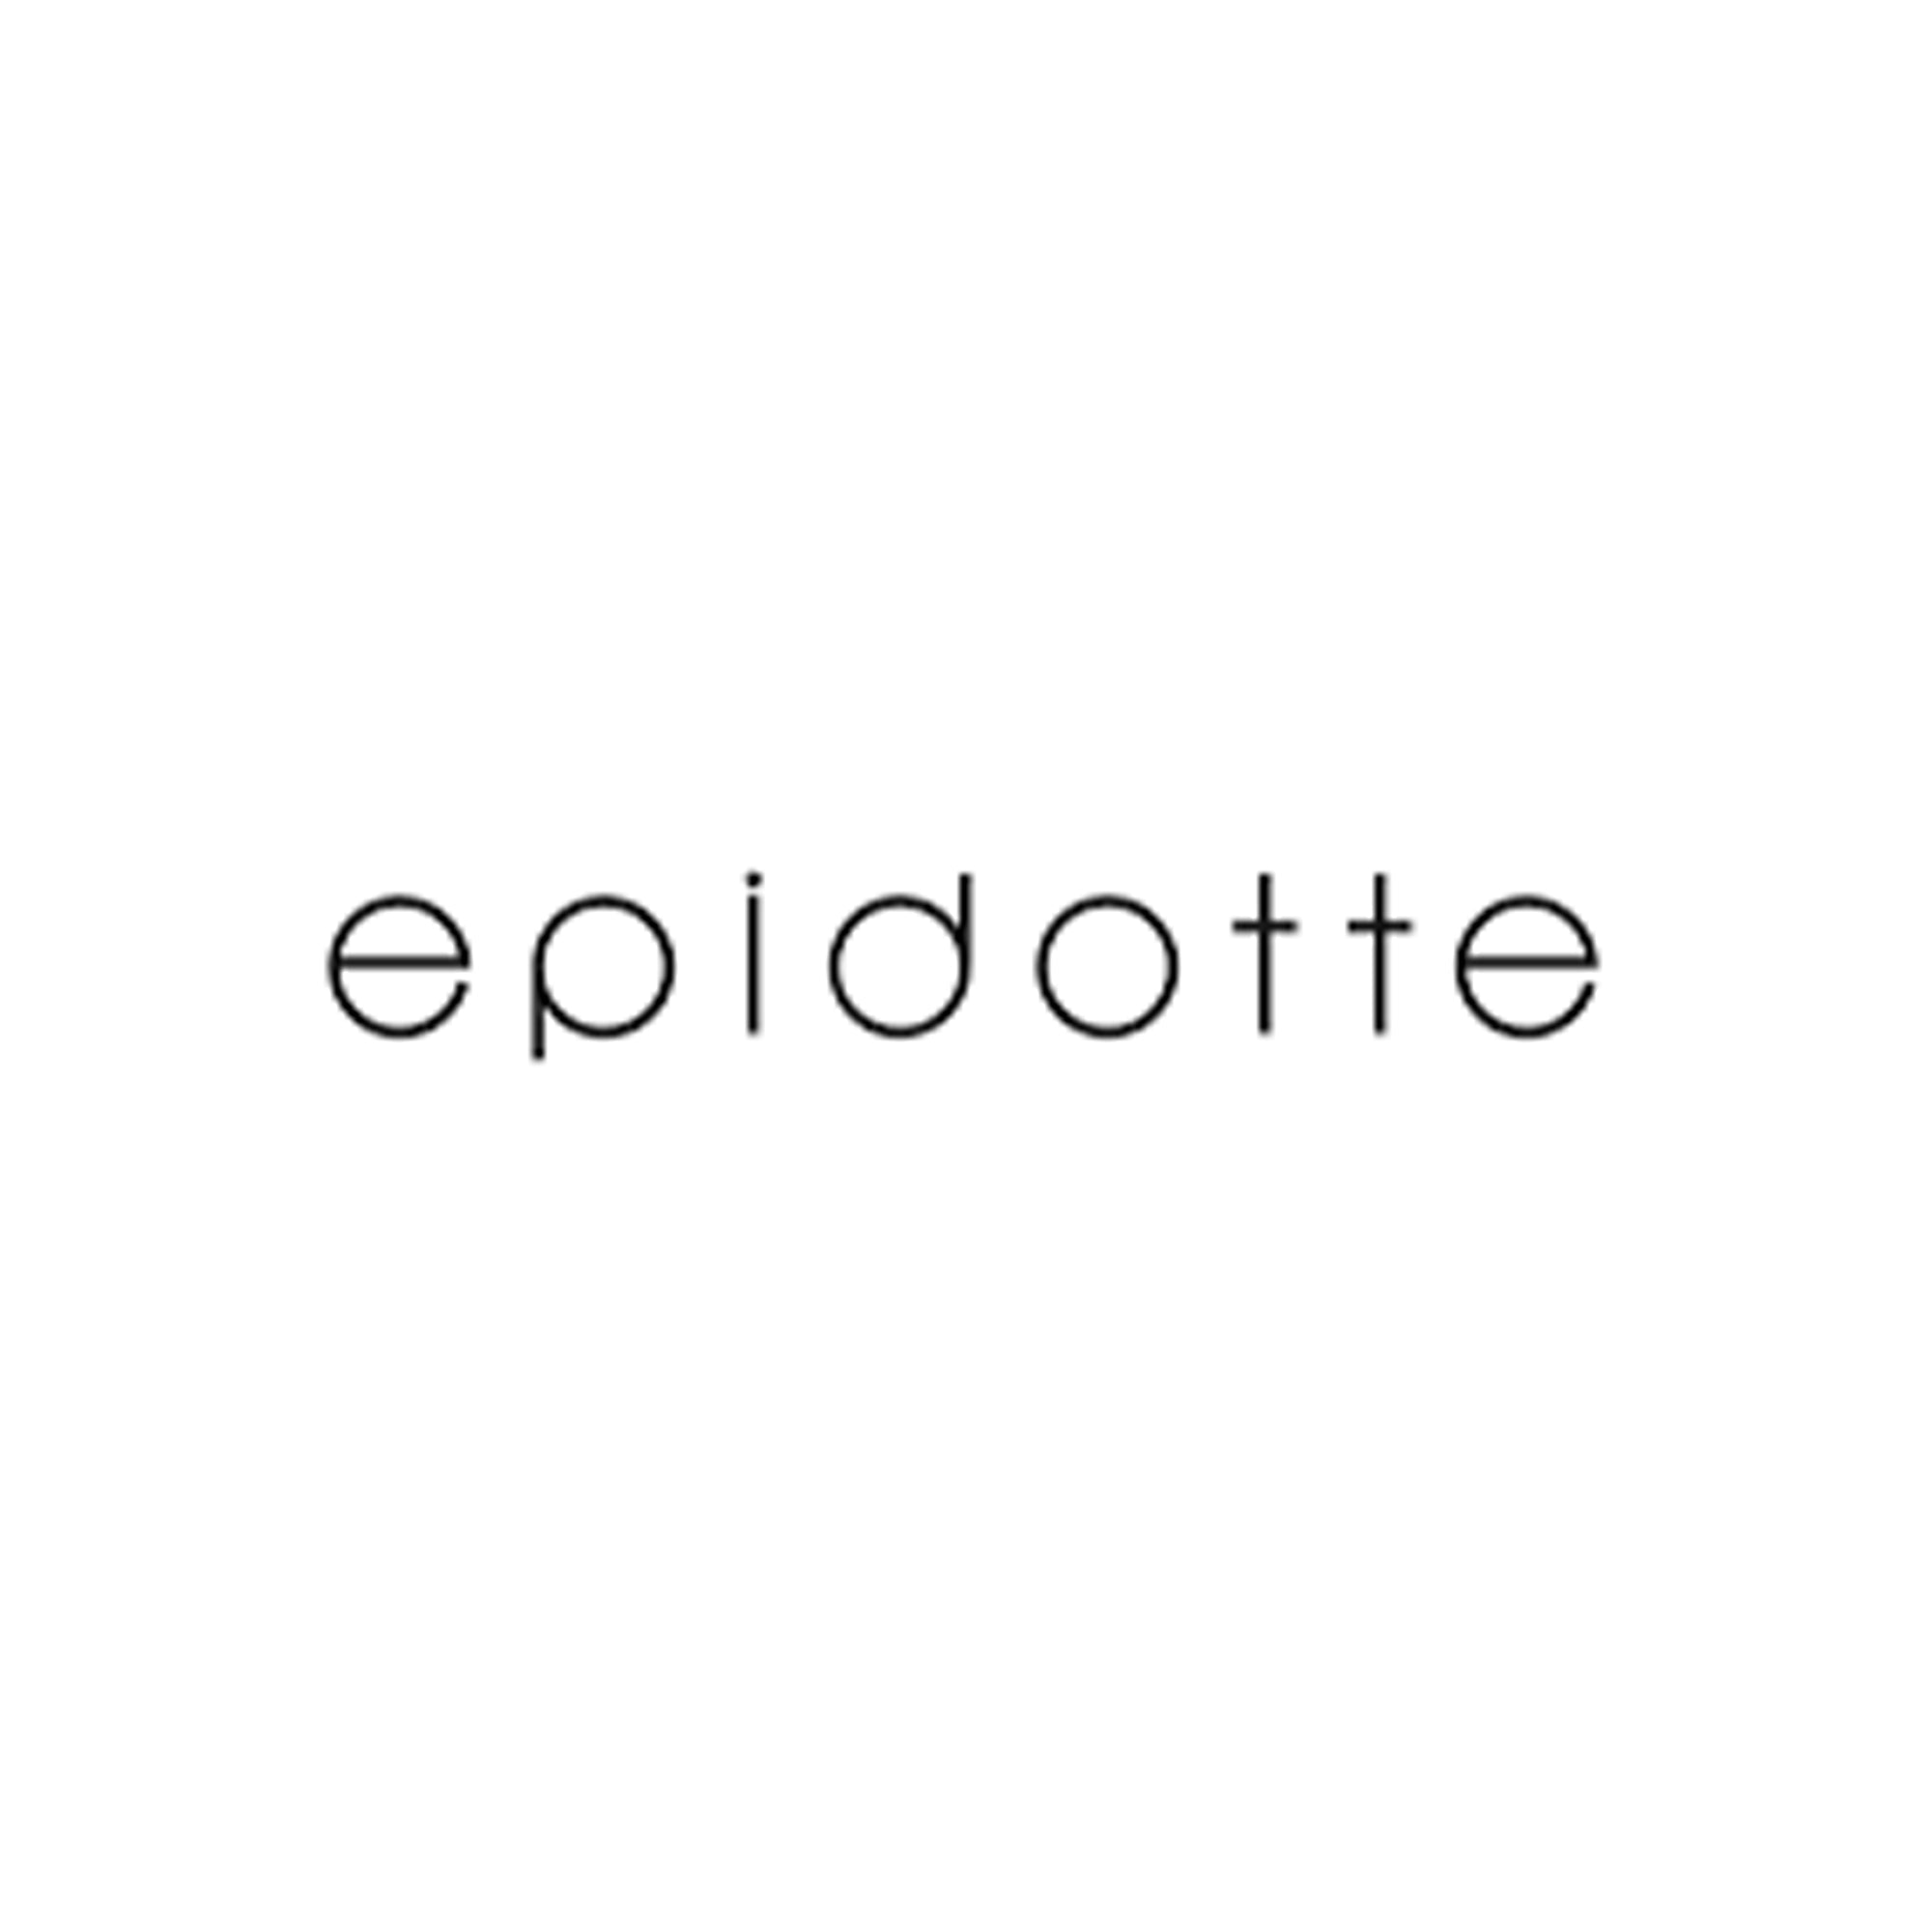 Epidotte logo